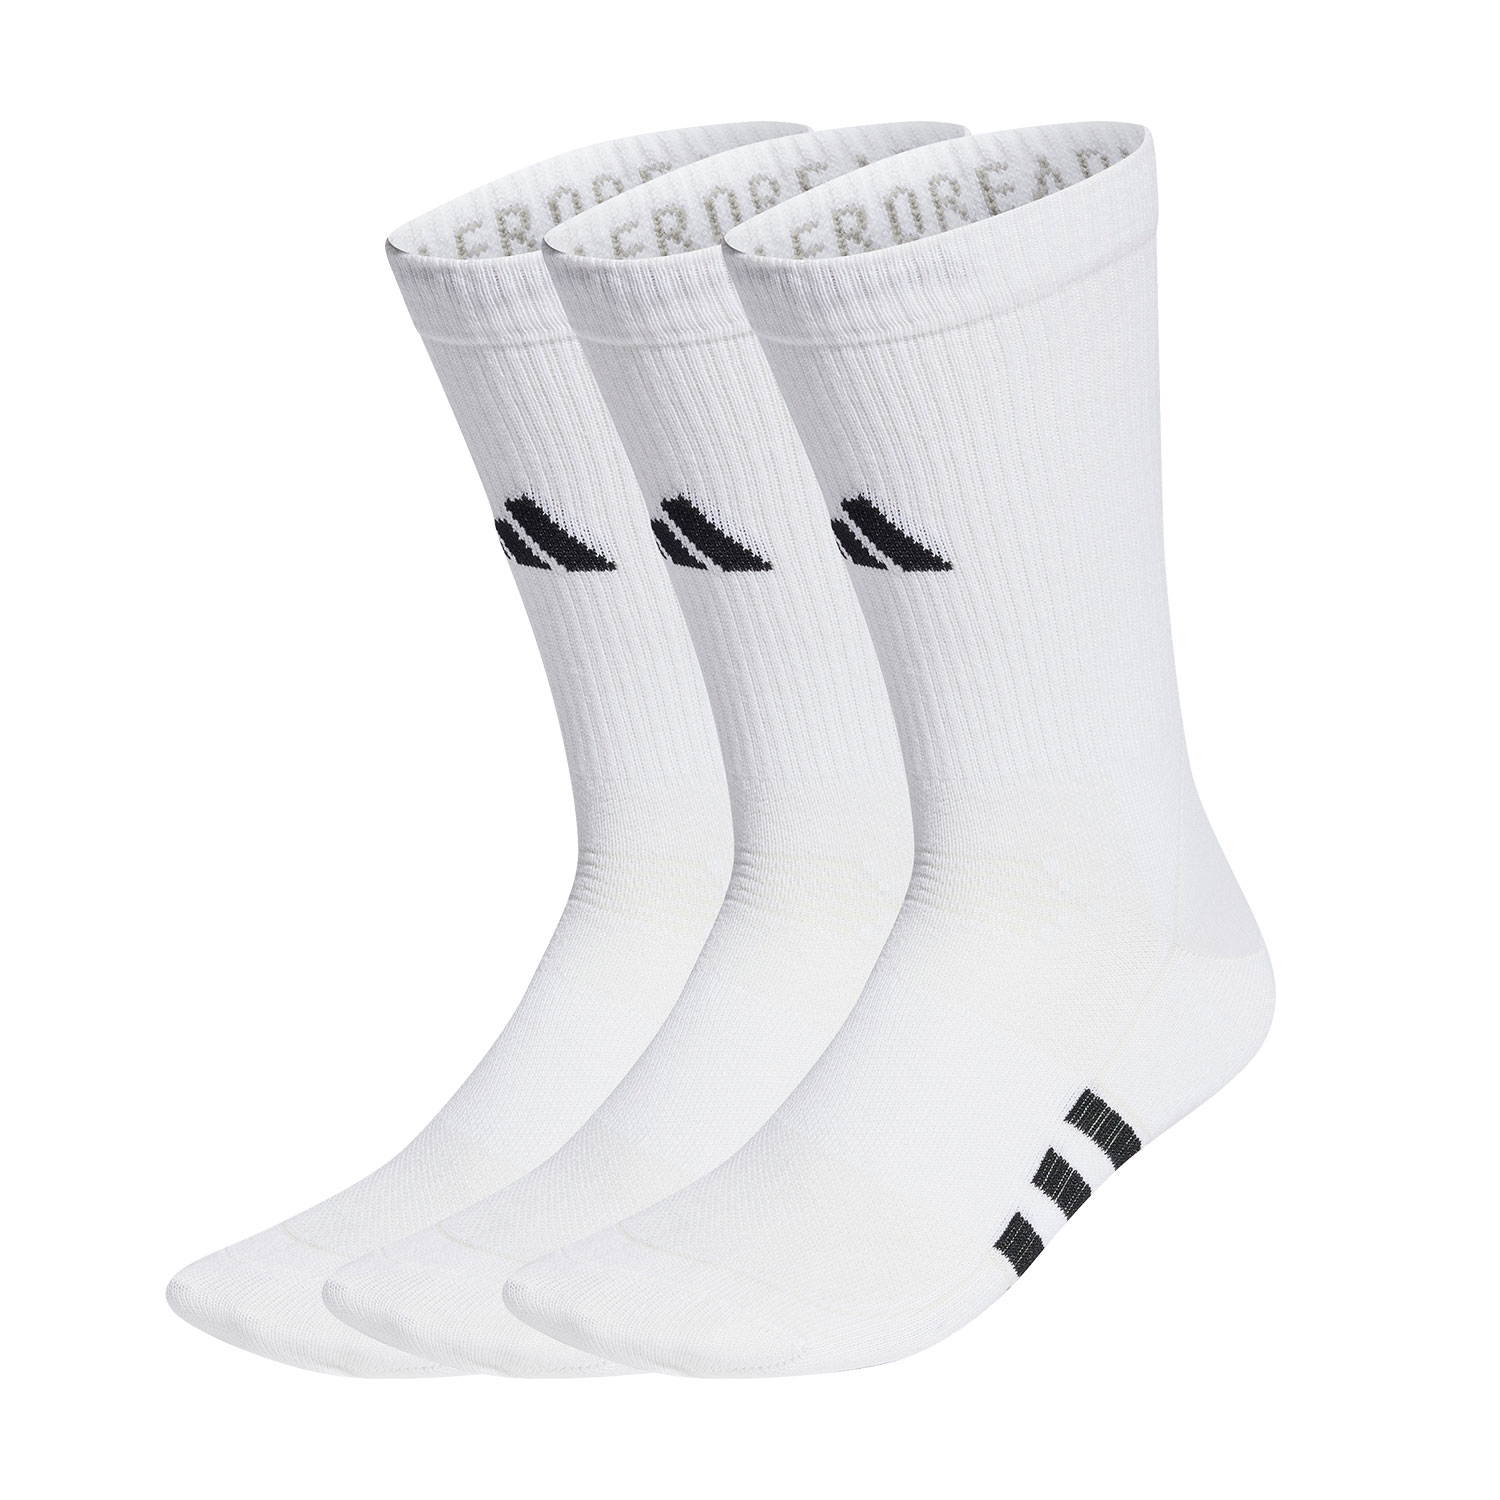 - adidas Light 3 Crew Running Performance White Socks x